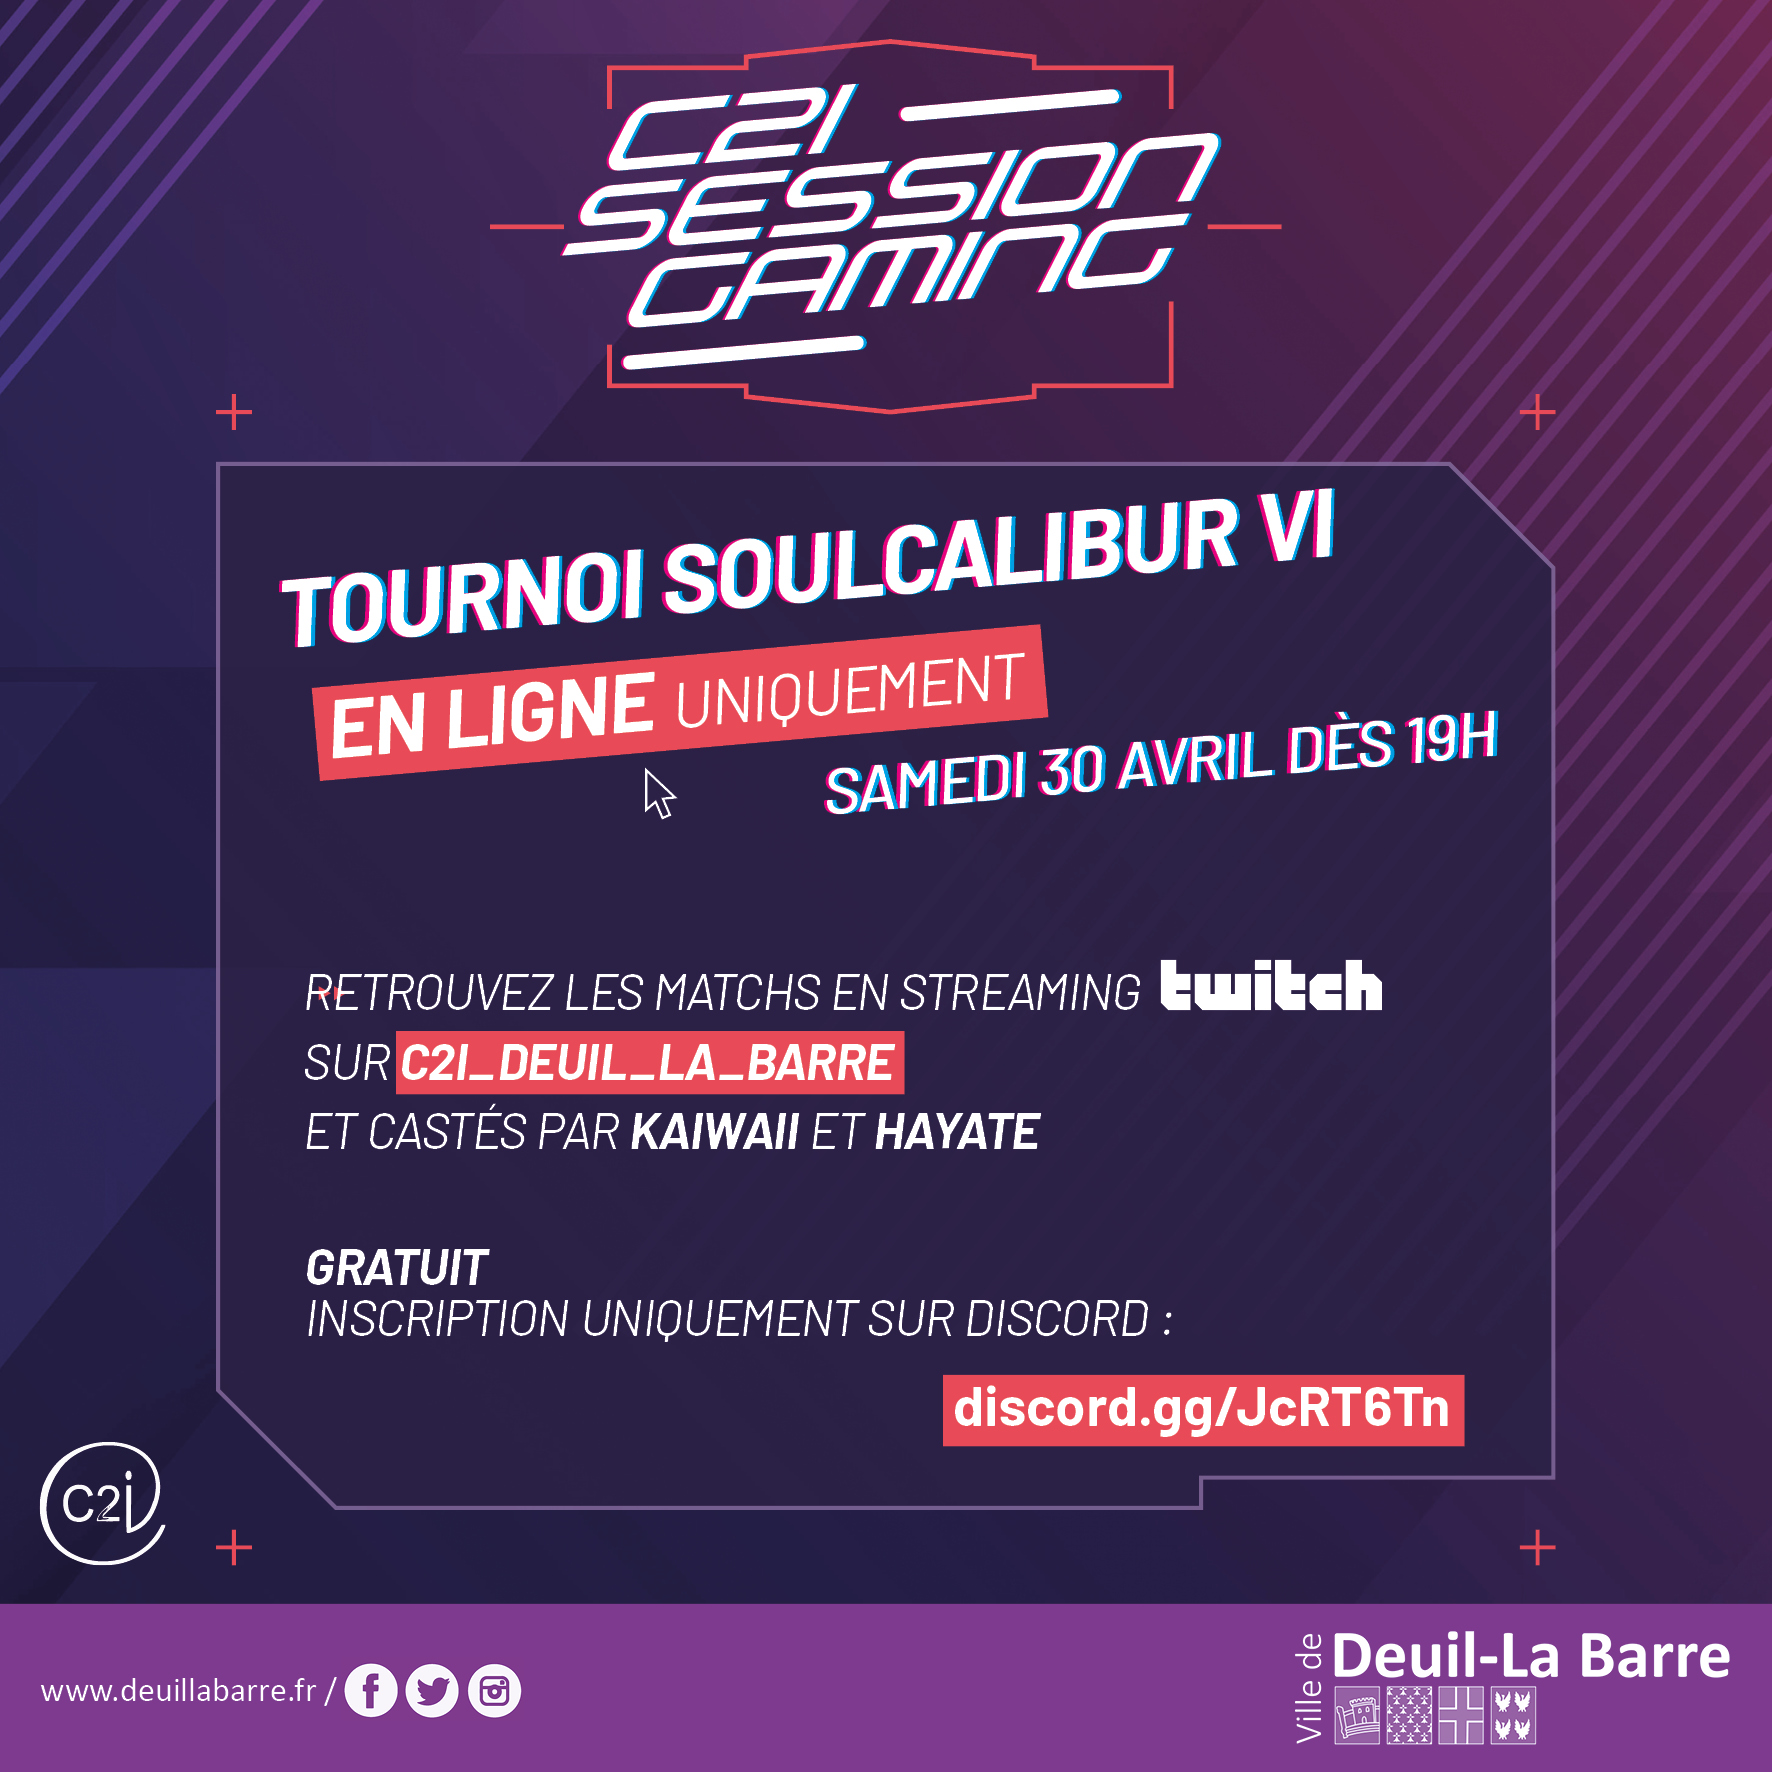 c2i session gaming tournoi soulcalibur